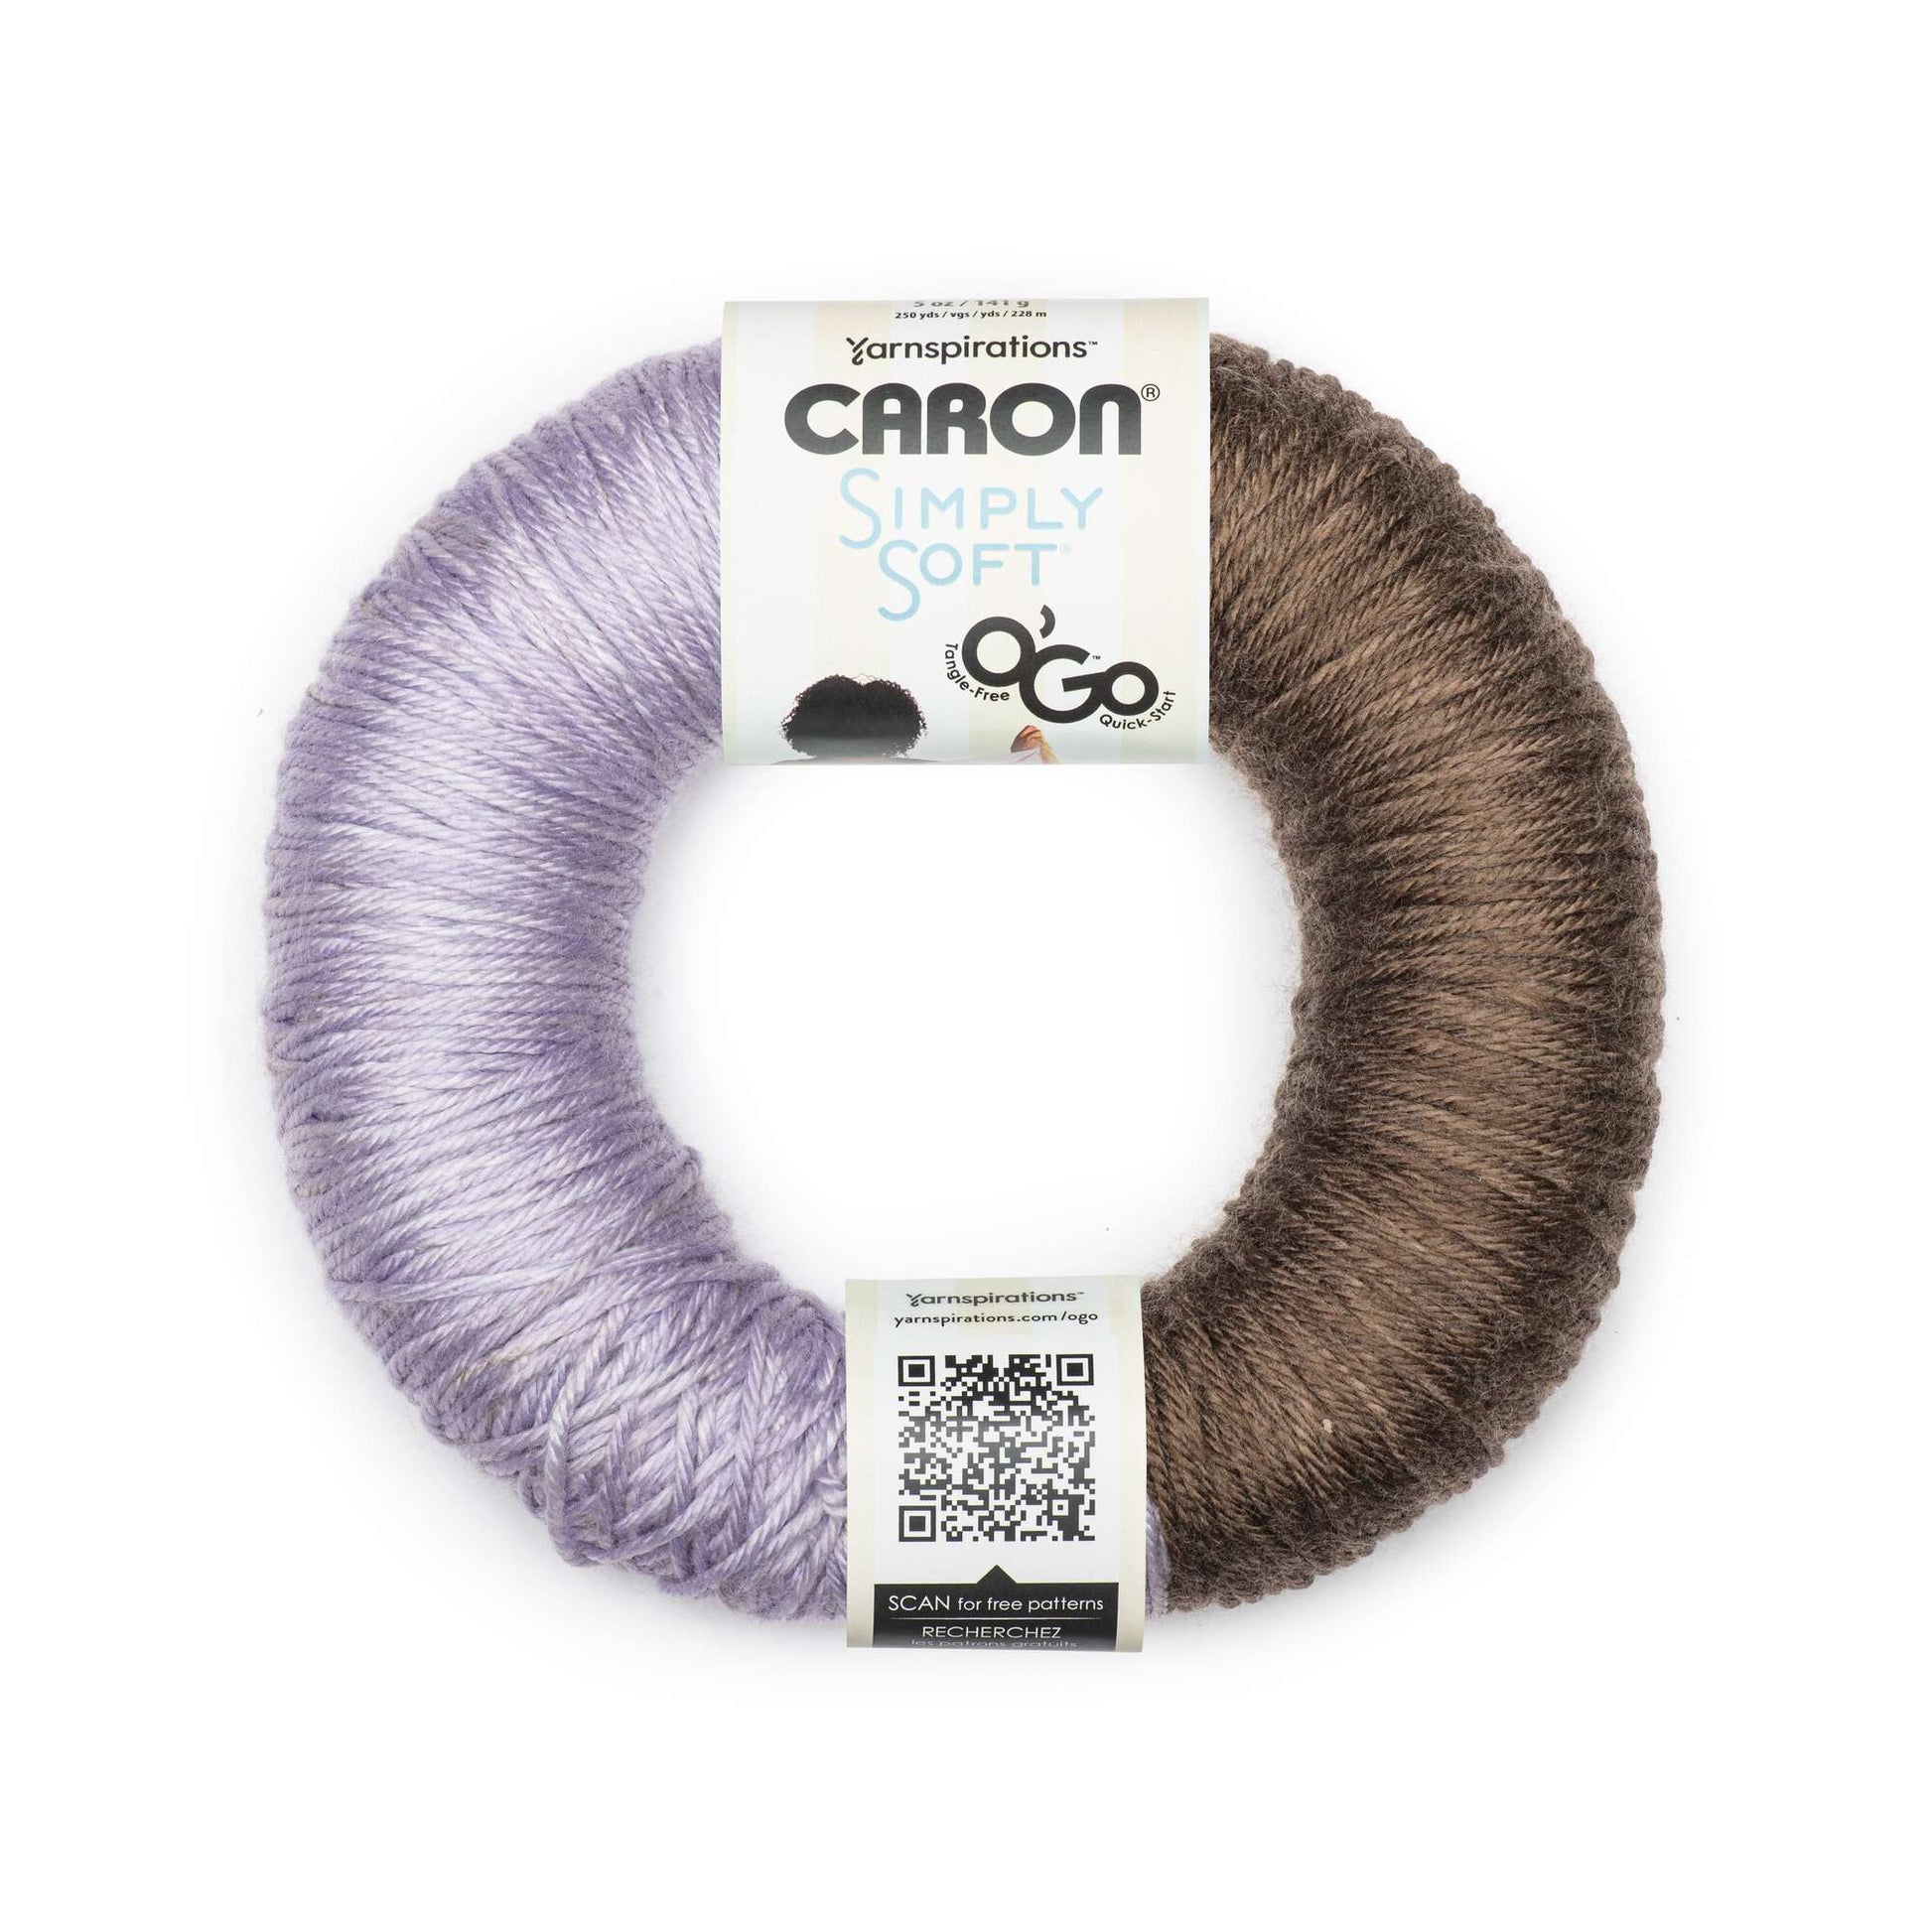 Caron Simply Soft O'Go (141g/5oz) - Clearance Shades* Almond Orchid